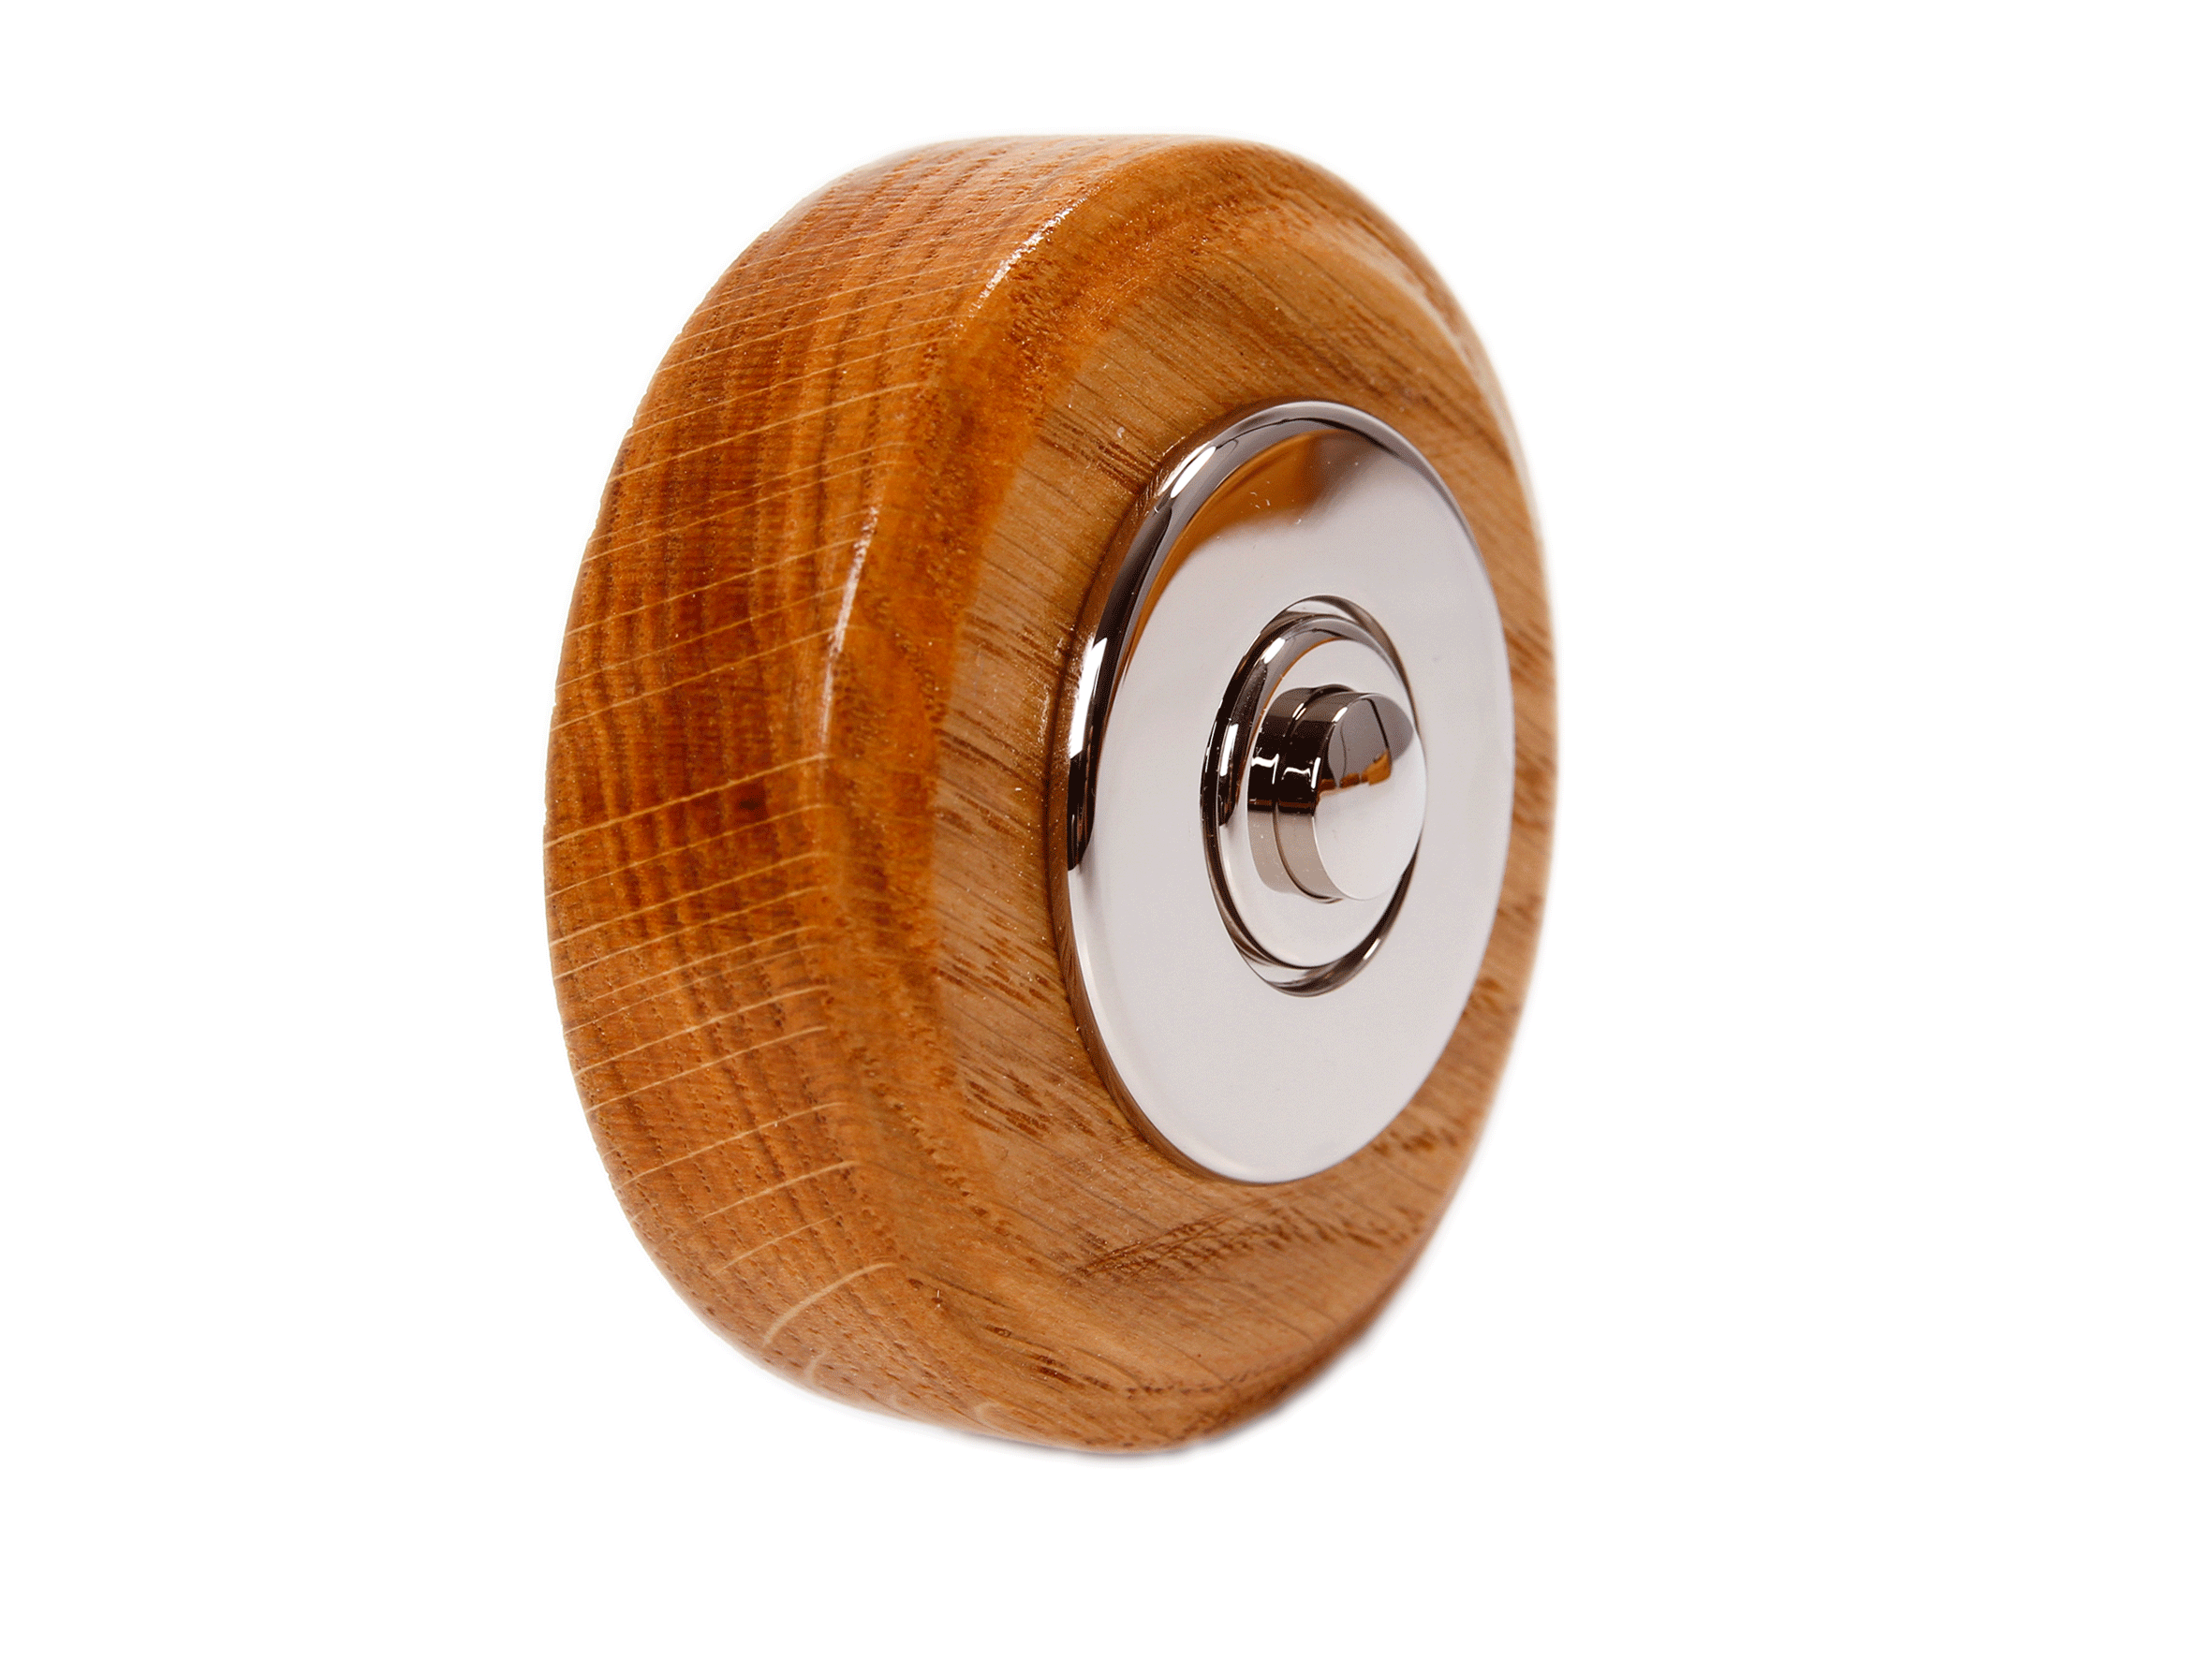 Sonnette Esterel sans fil bois chêne collerette chrome avec carillon –  BIDOT Yves